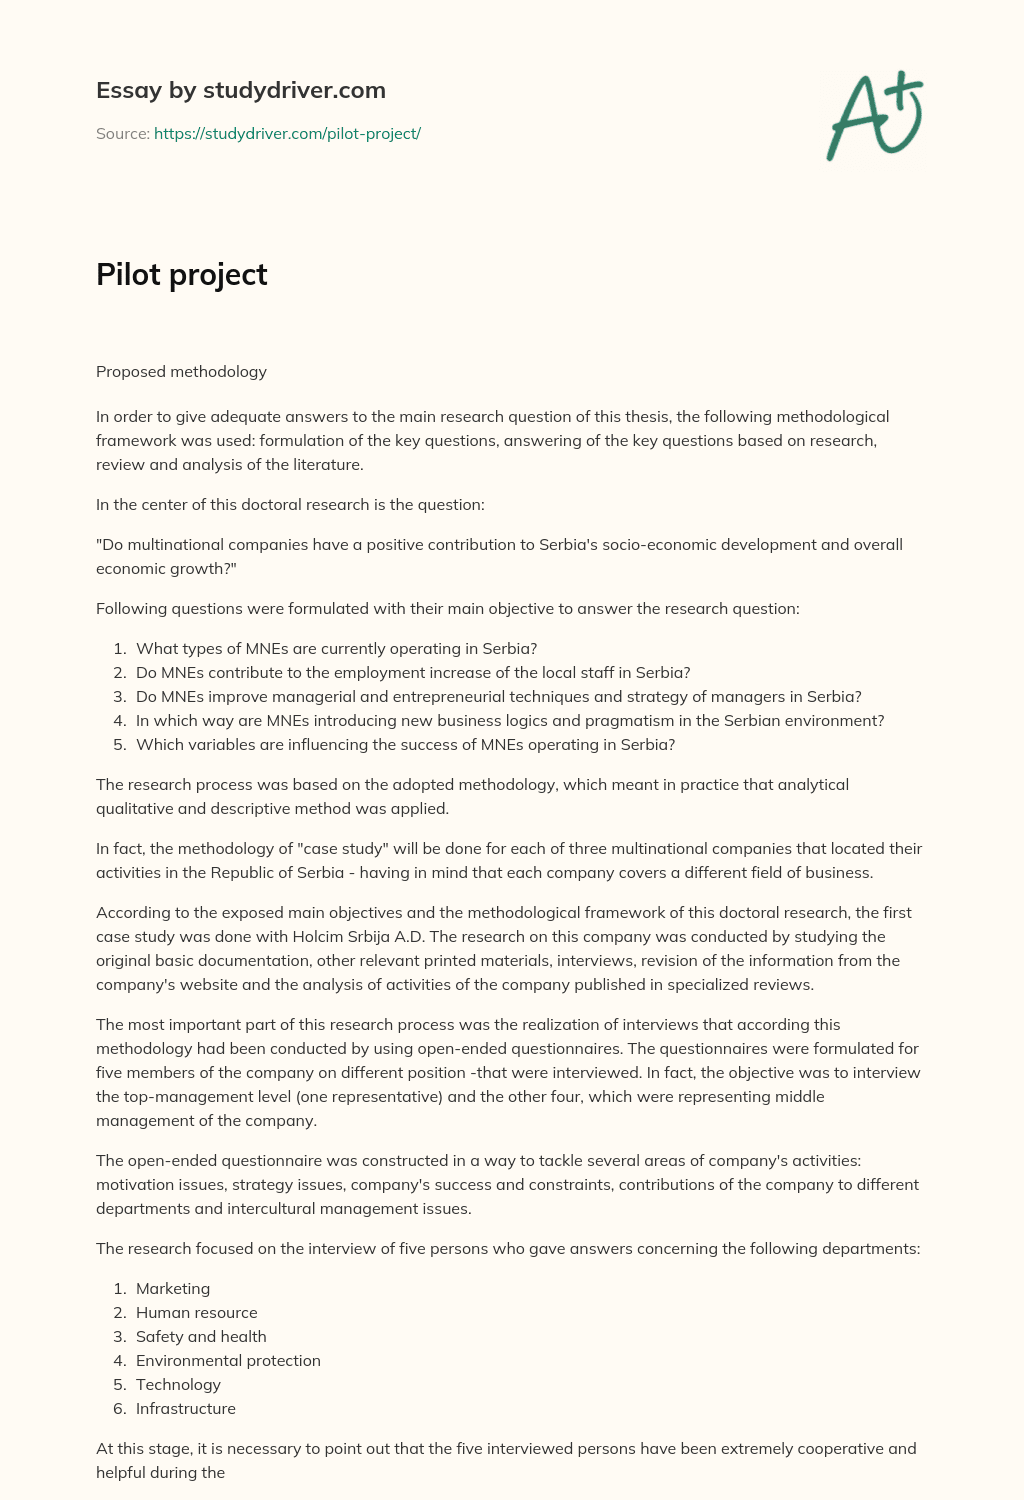 essay on pilot project